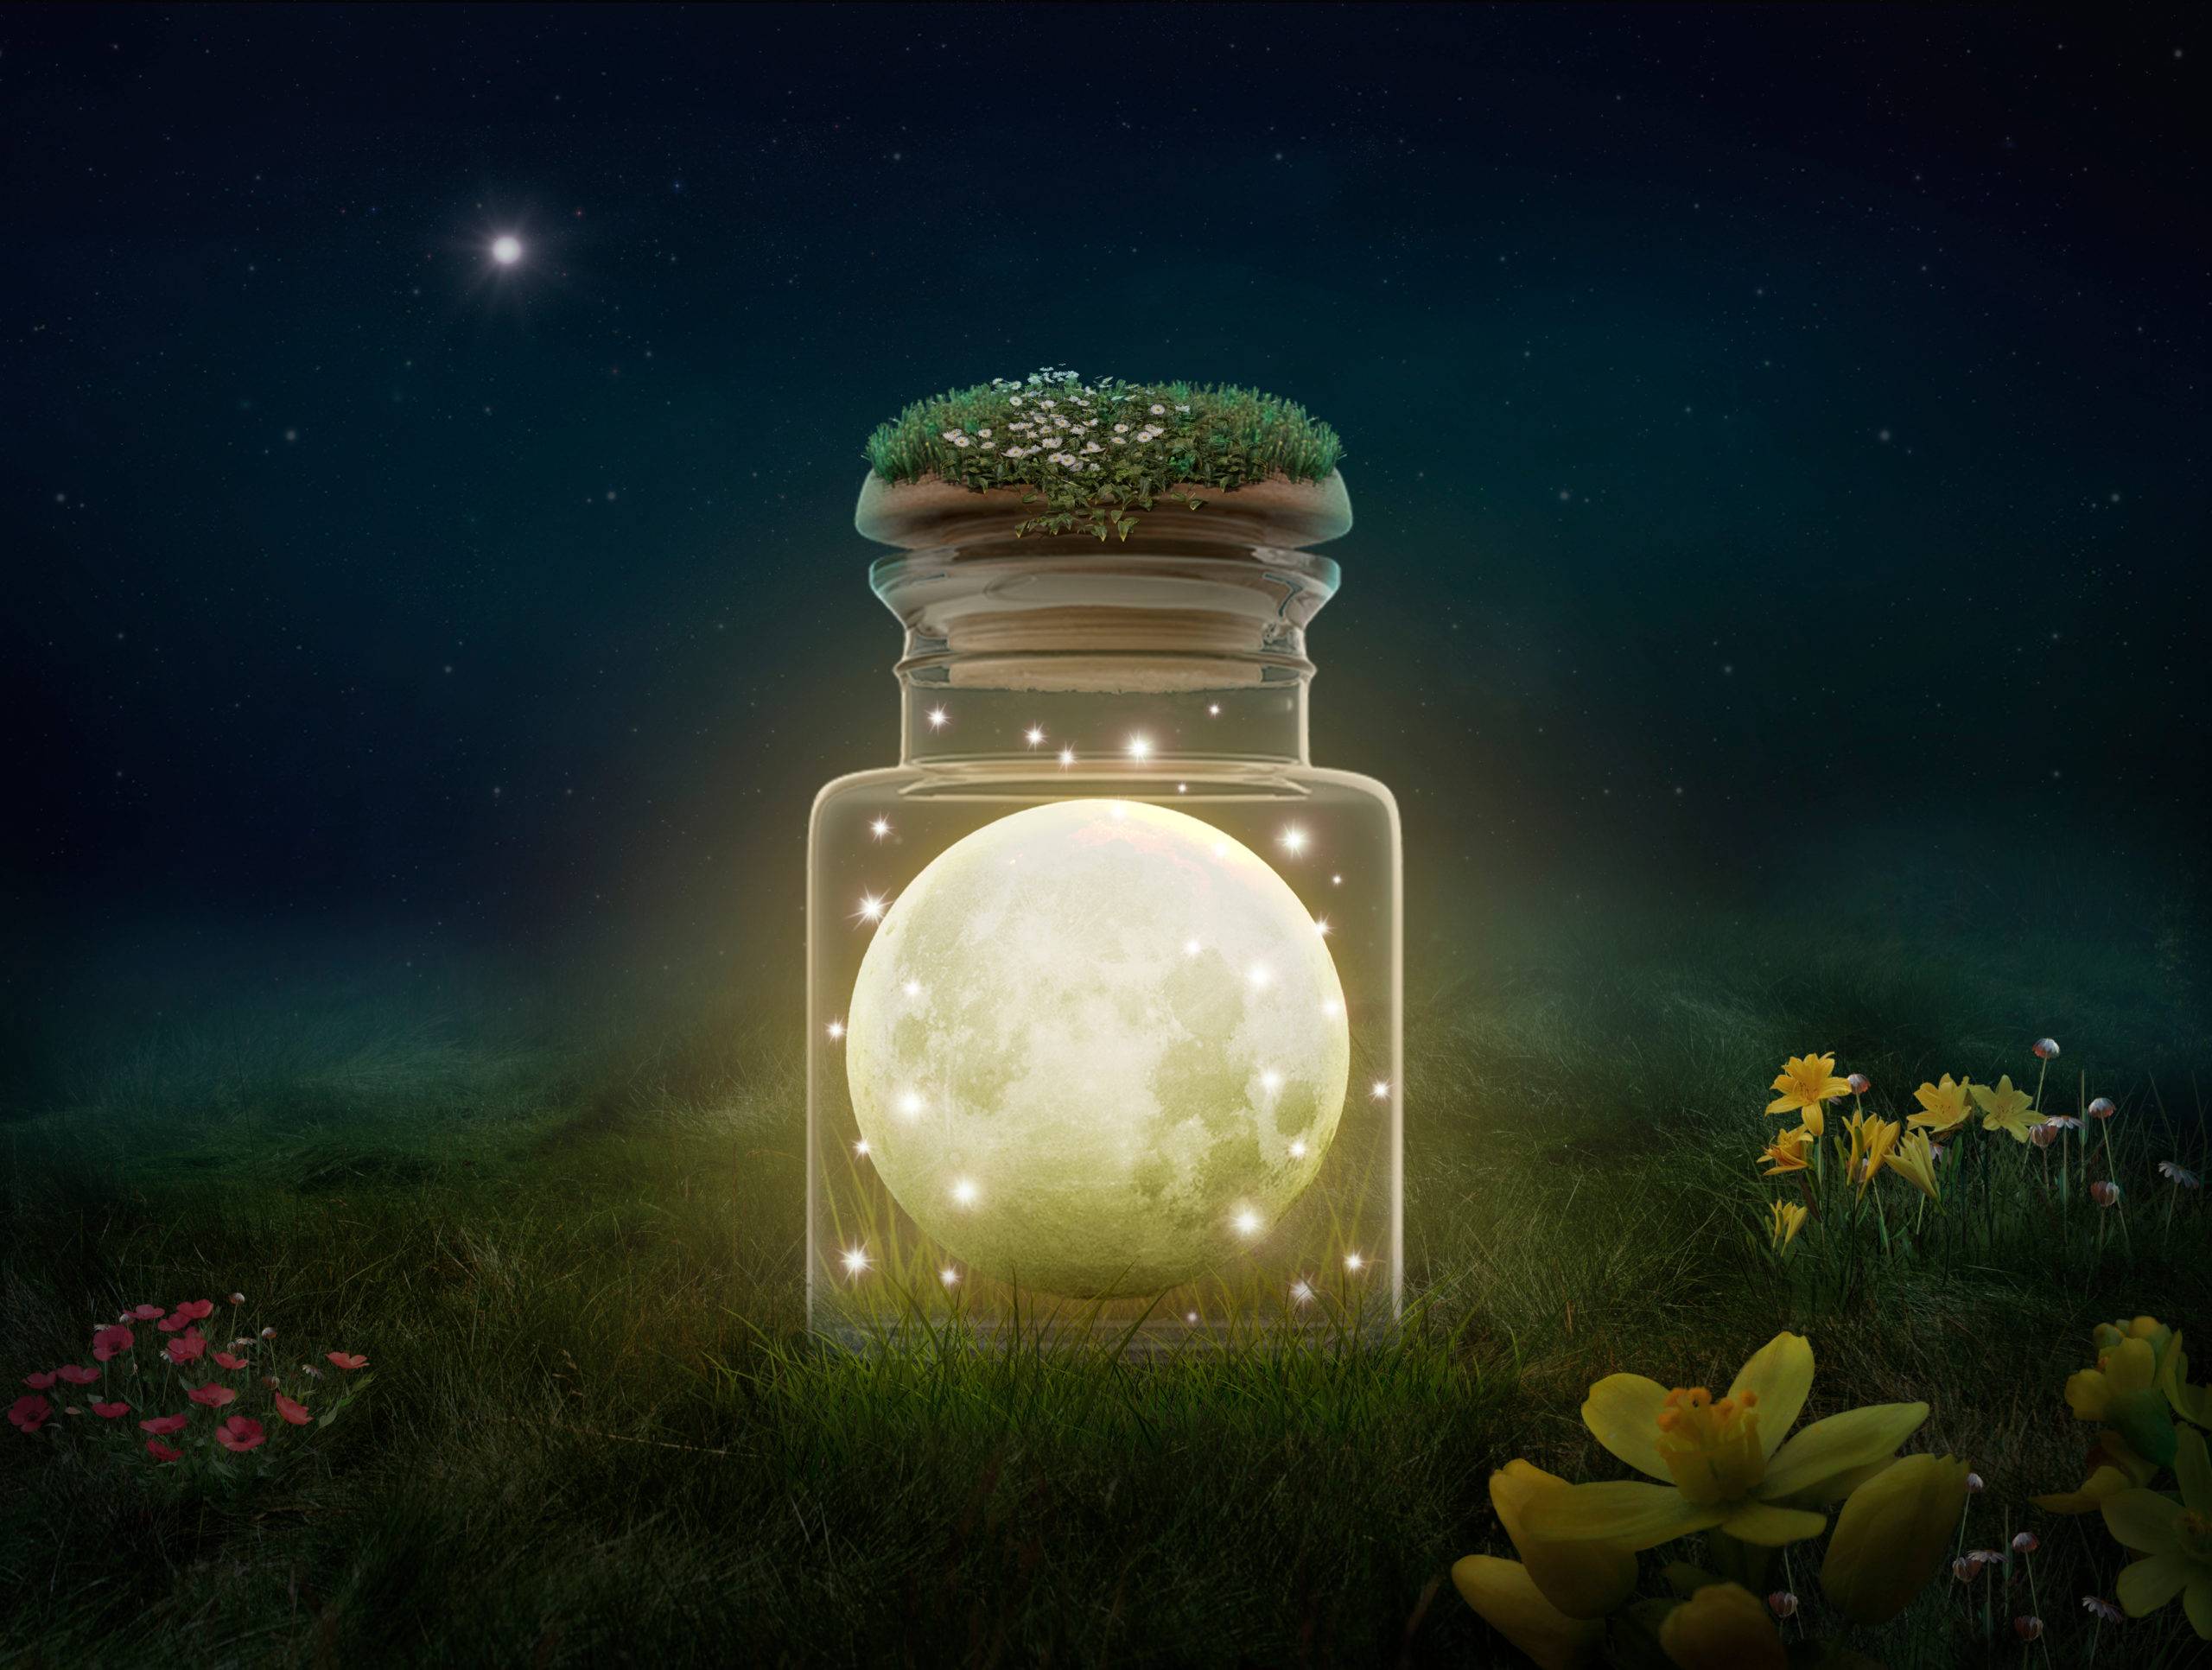 A bright full moon in a jar